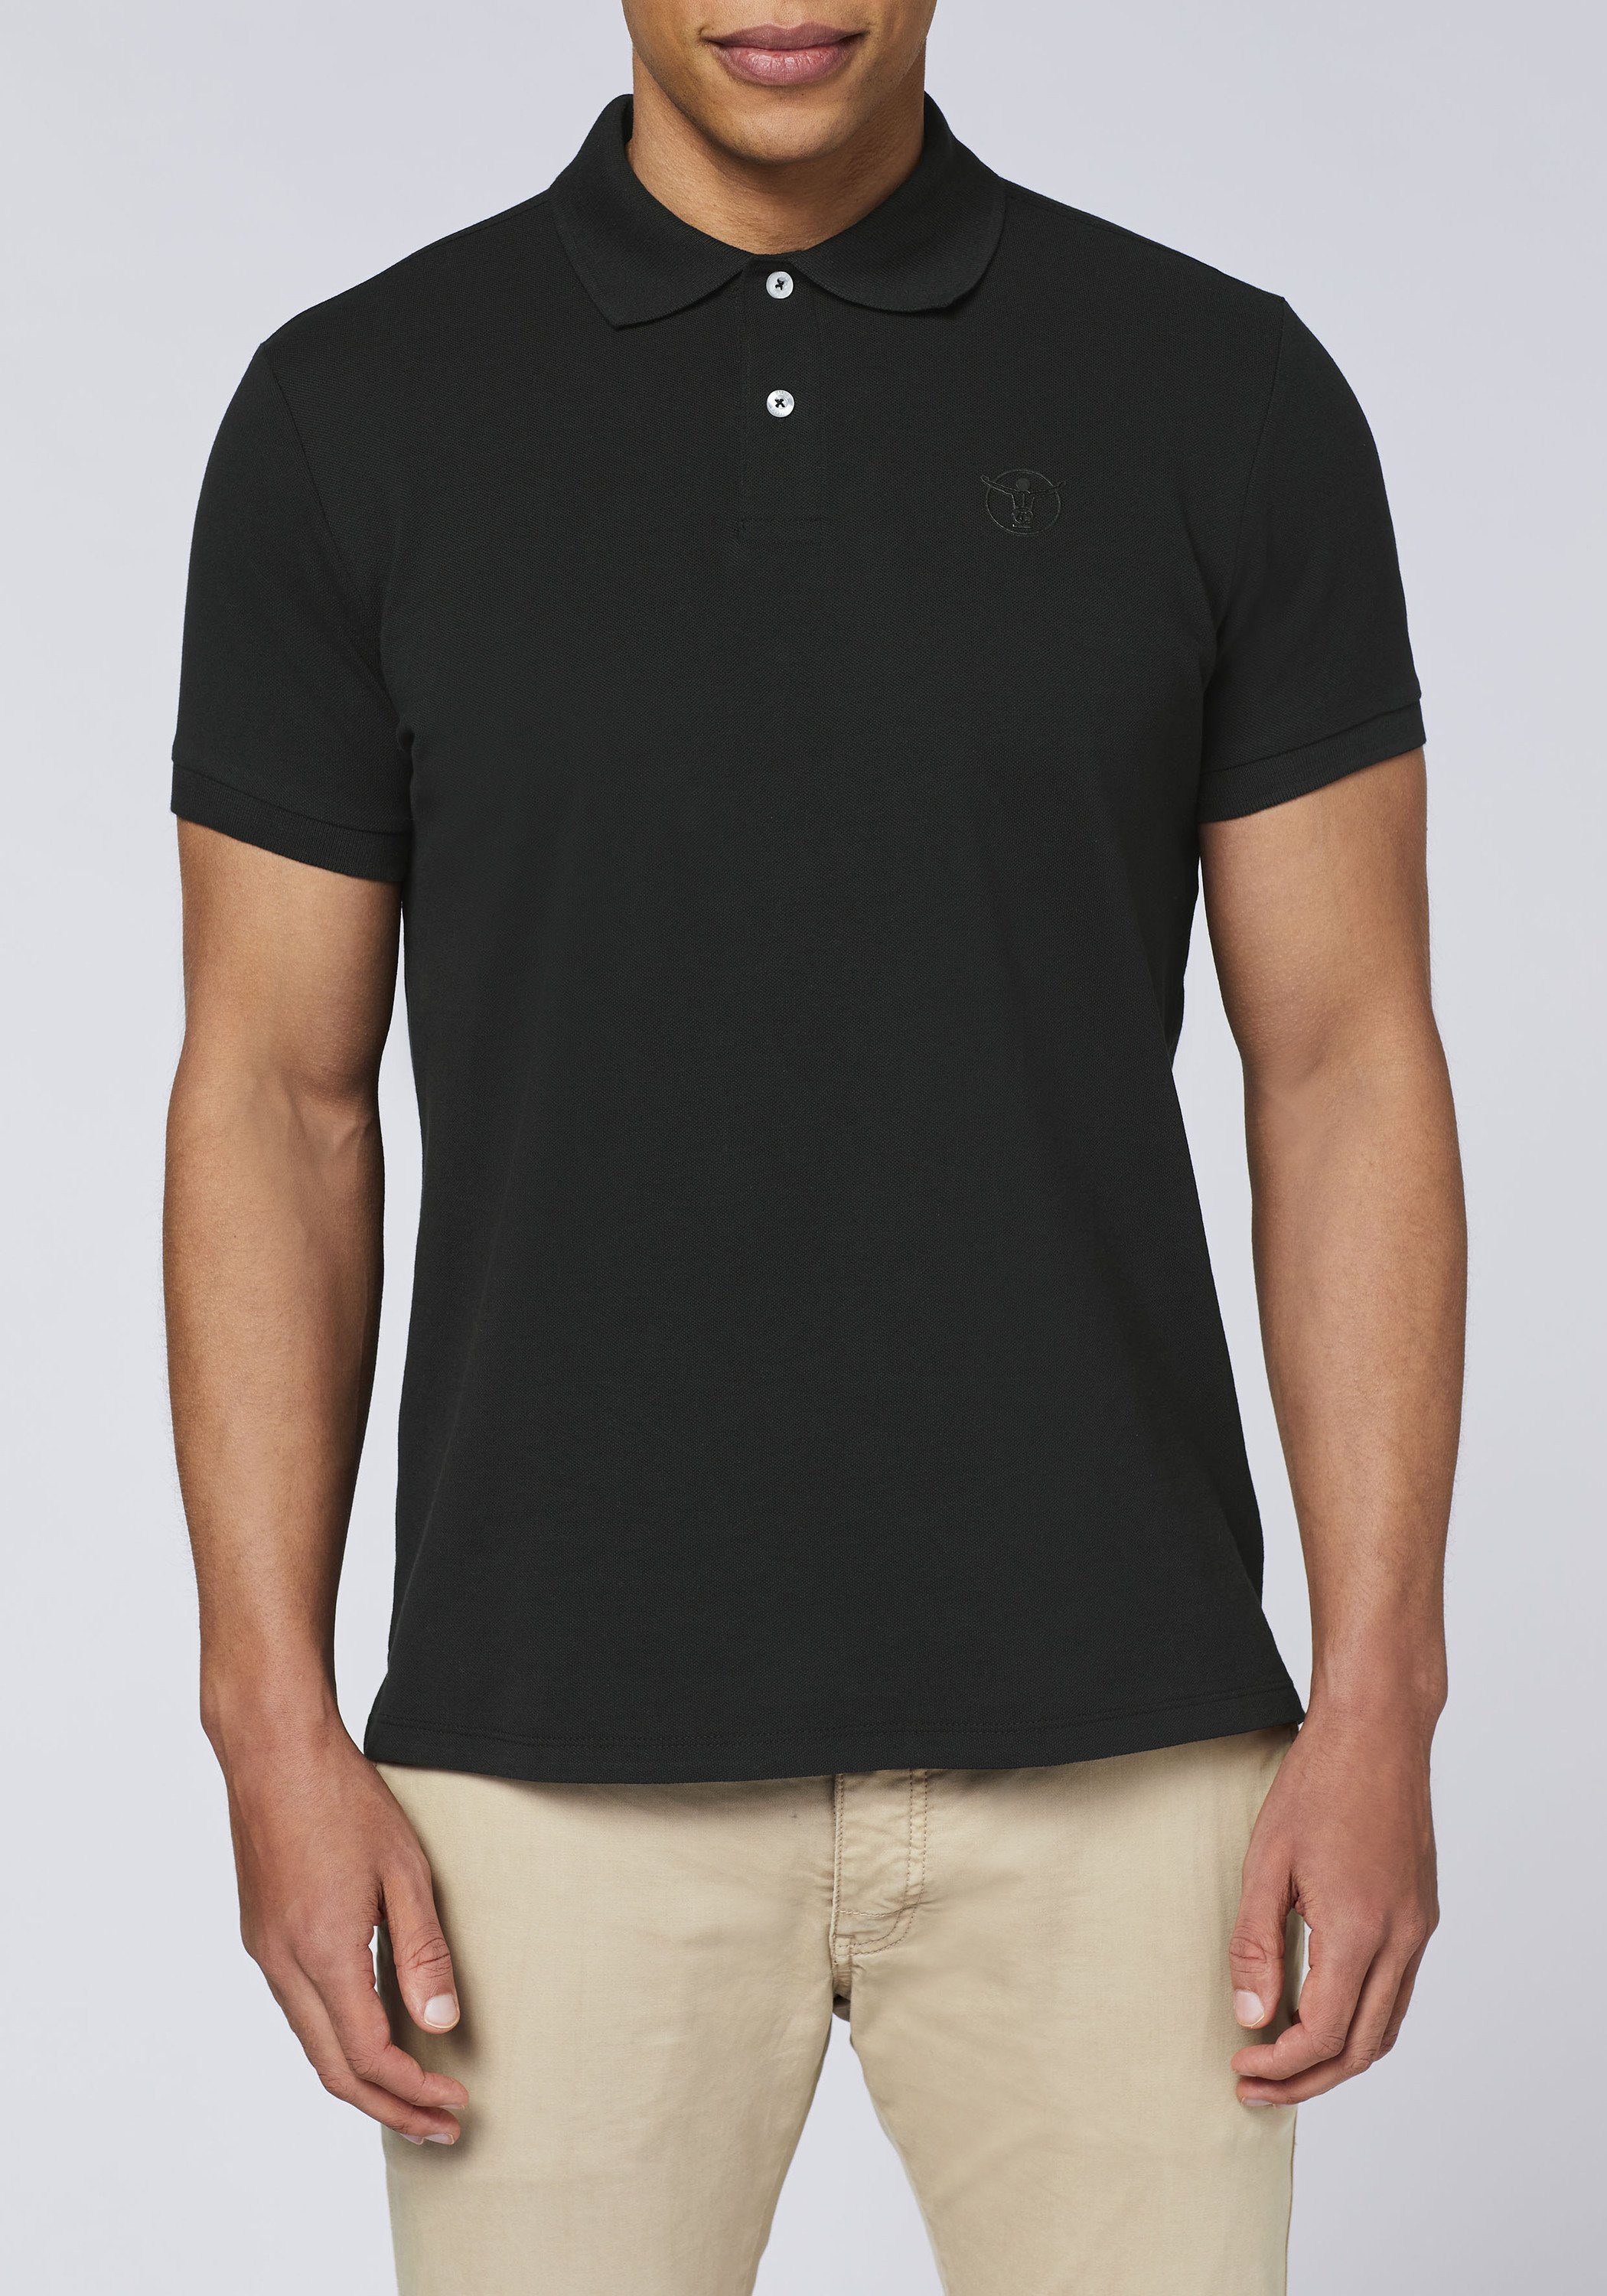 Black 19-3911 1 Chiemsee Poloshirt Beauty Jumper-Logo mit Poloshirt